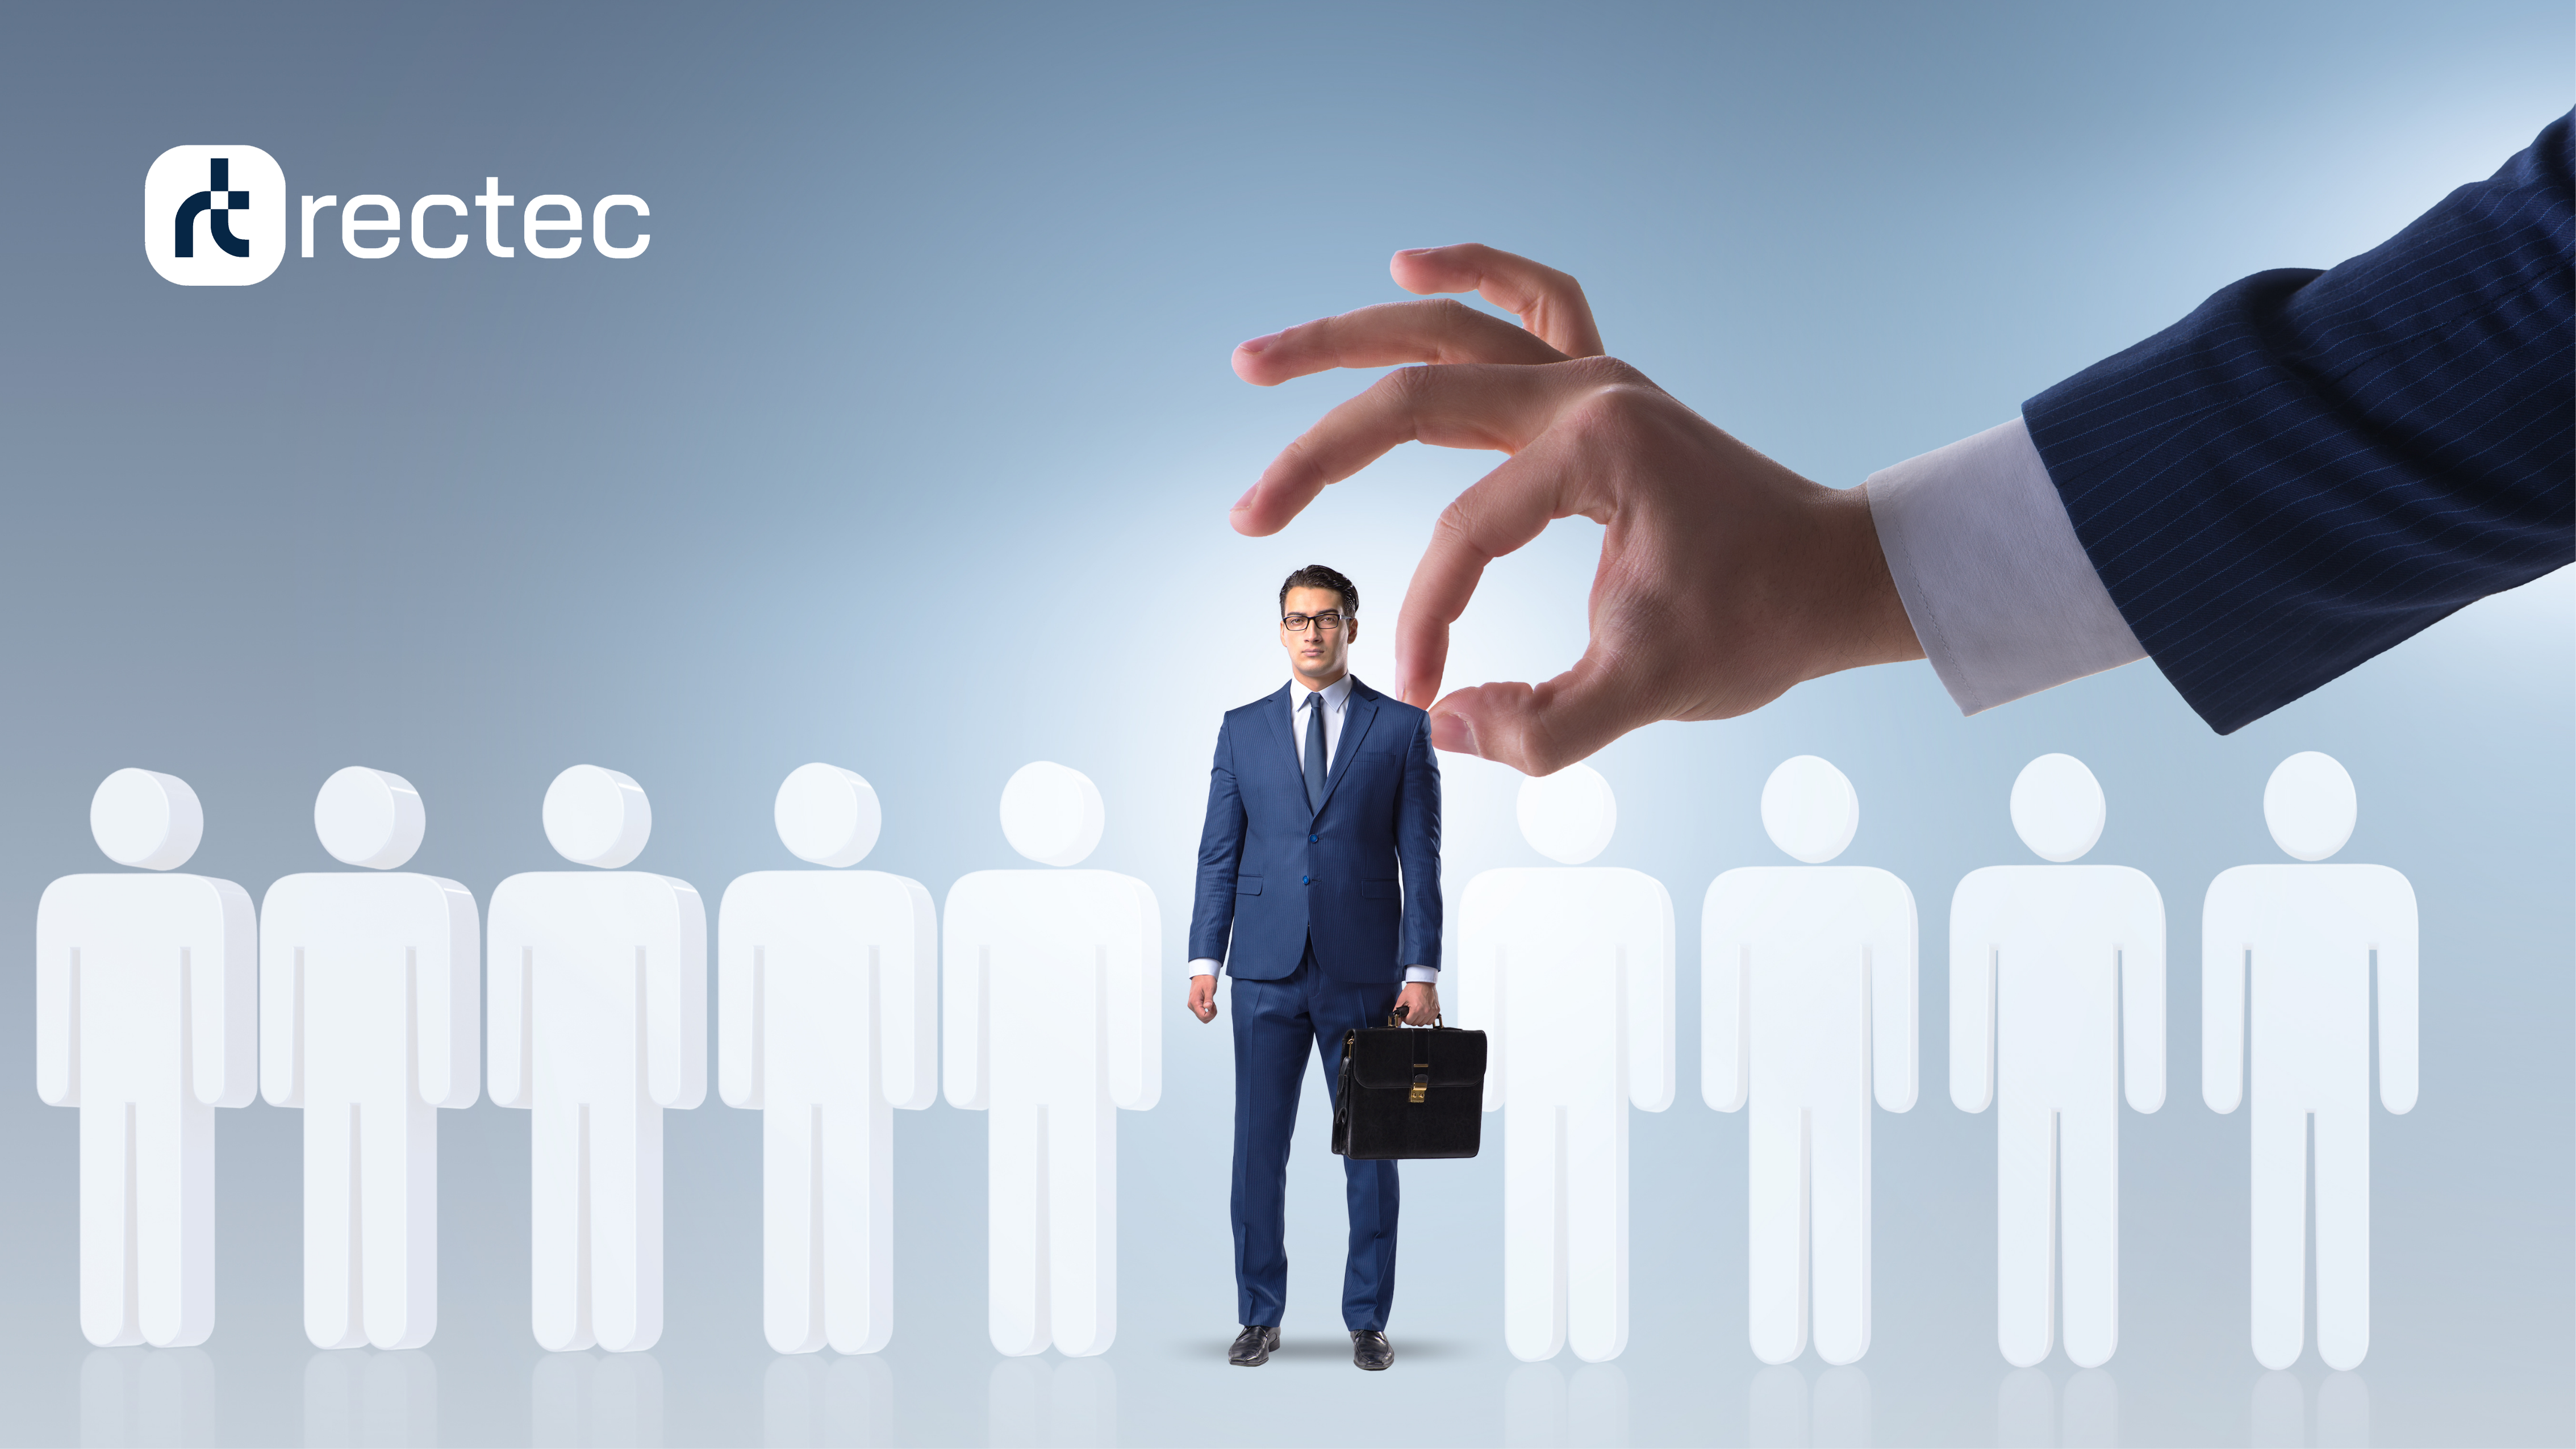 Rectec Blog - Valuable Recruitment & HR Insights Rectec